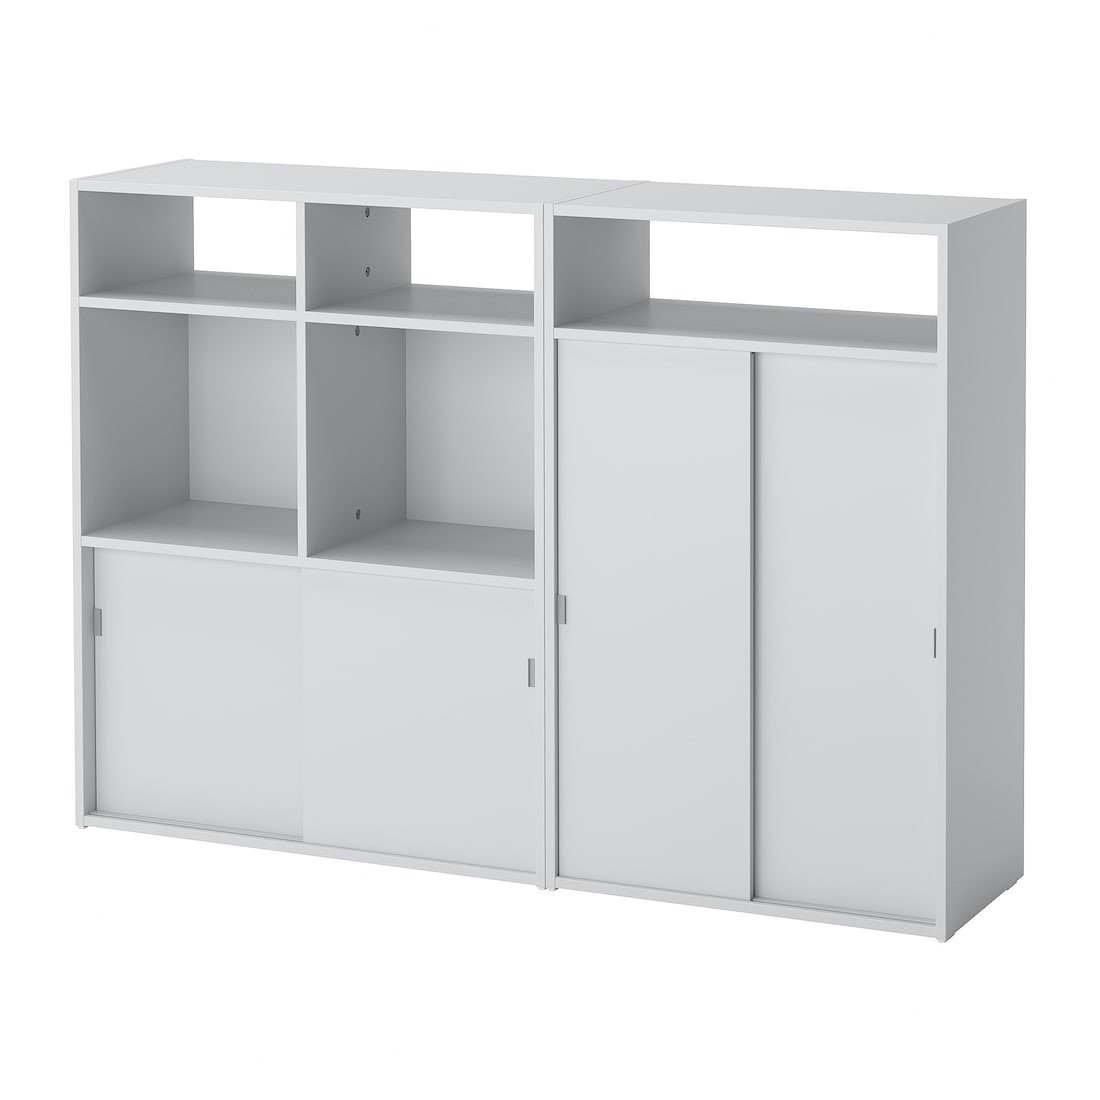 SPIKSMED Комбинация шкафов, светло-серый, 137x32x96 см